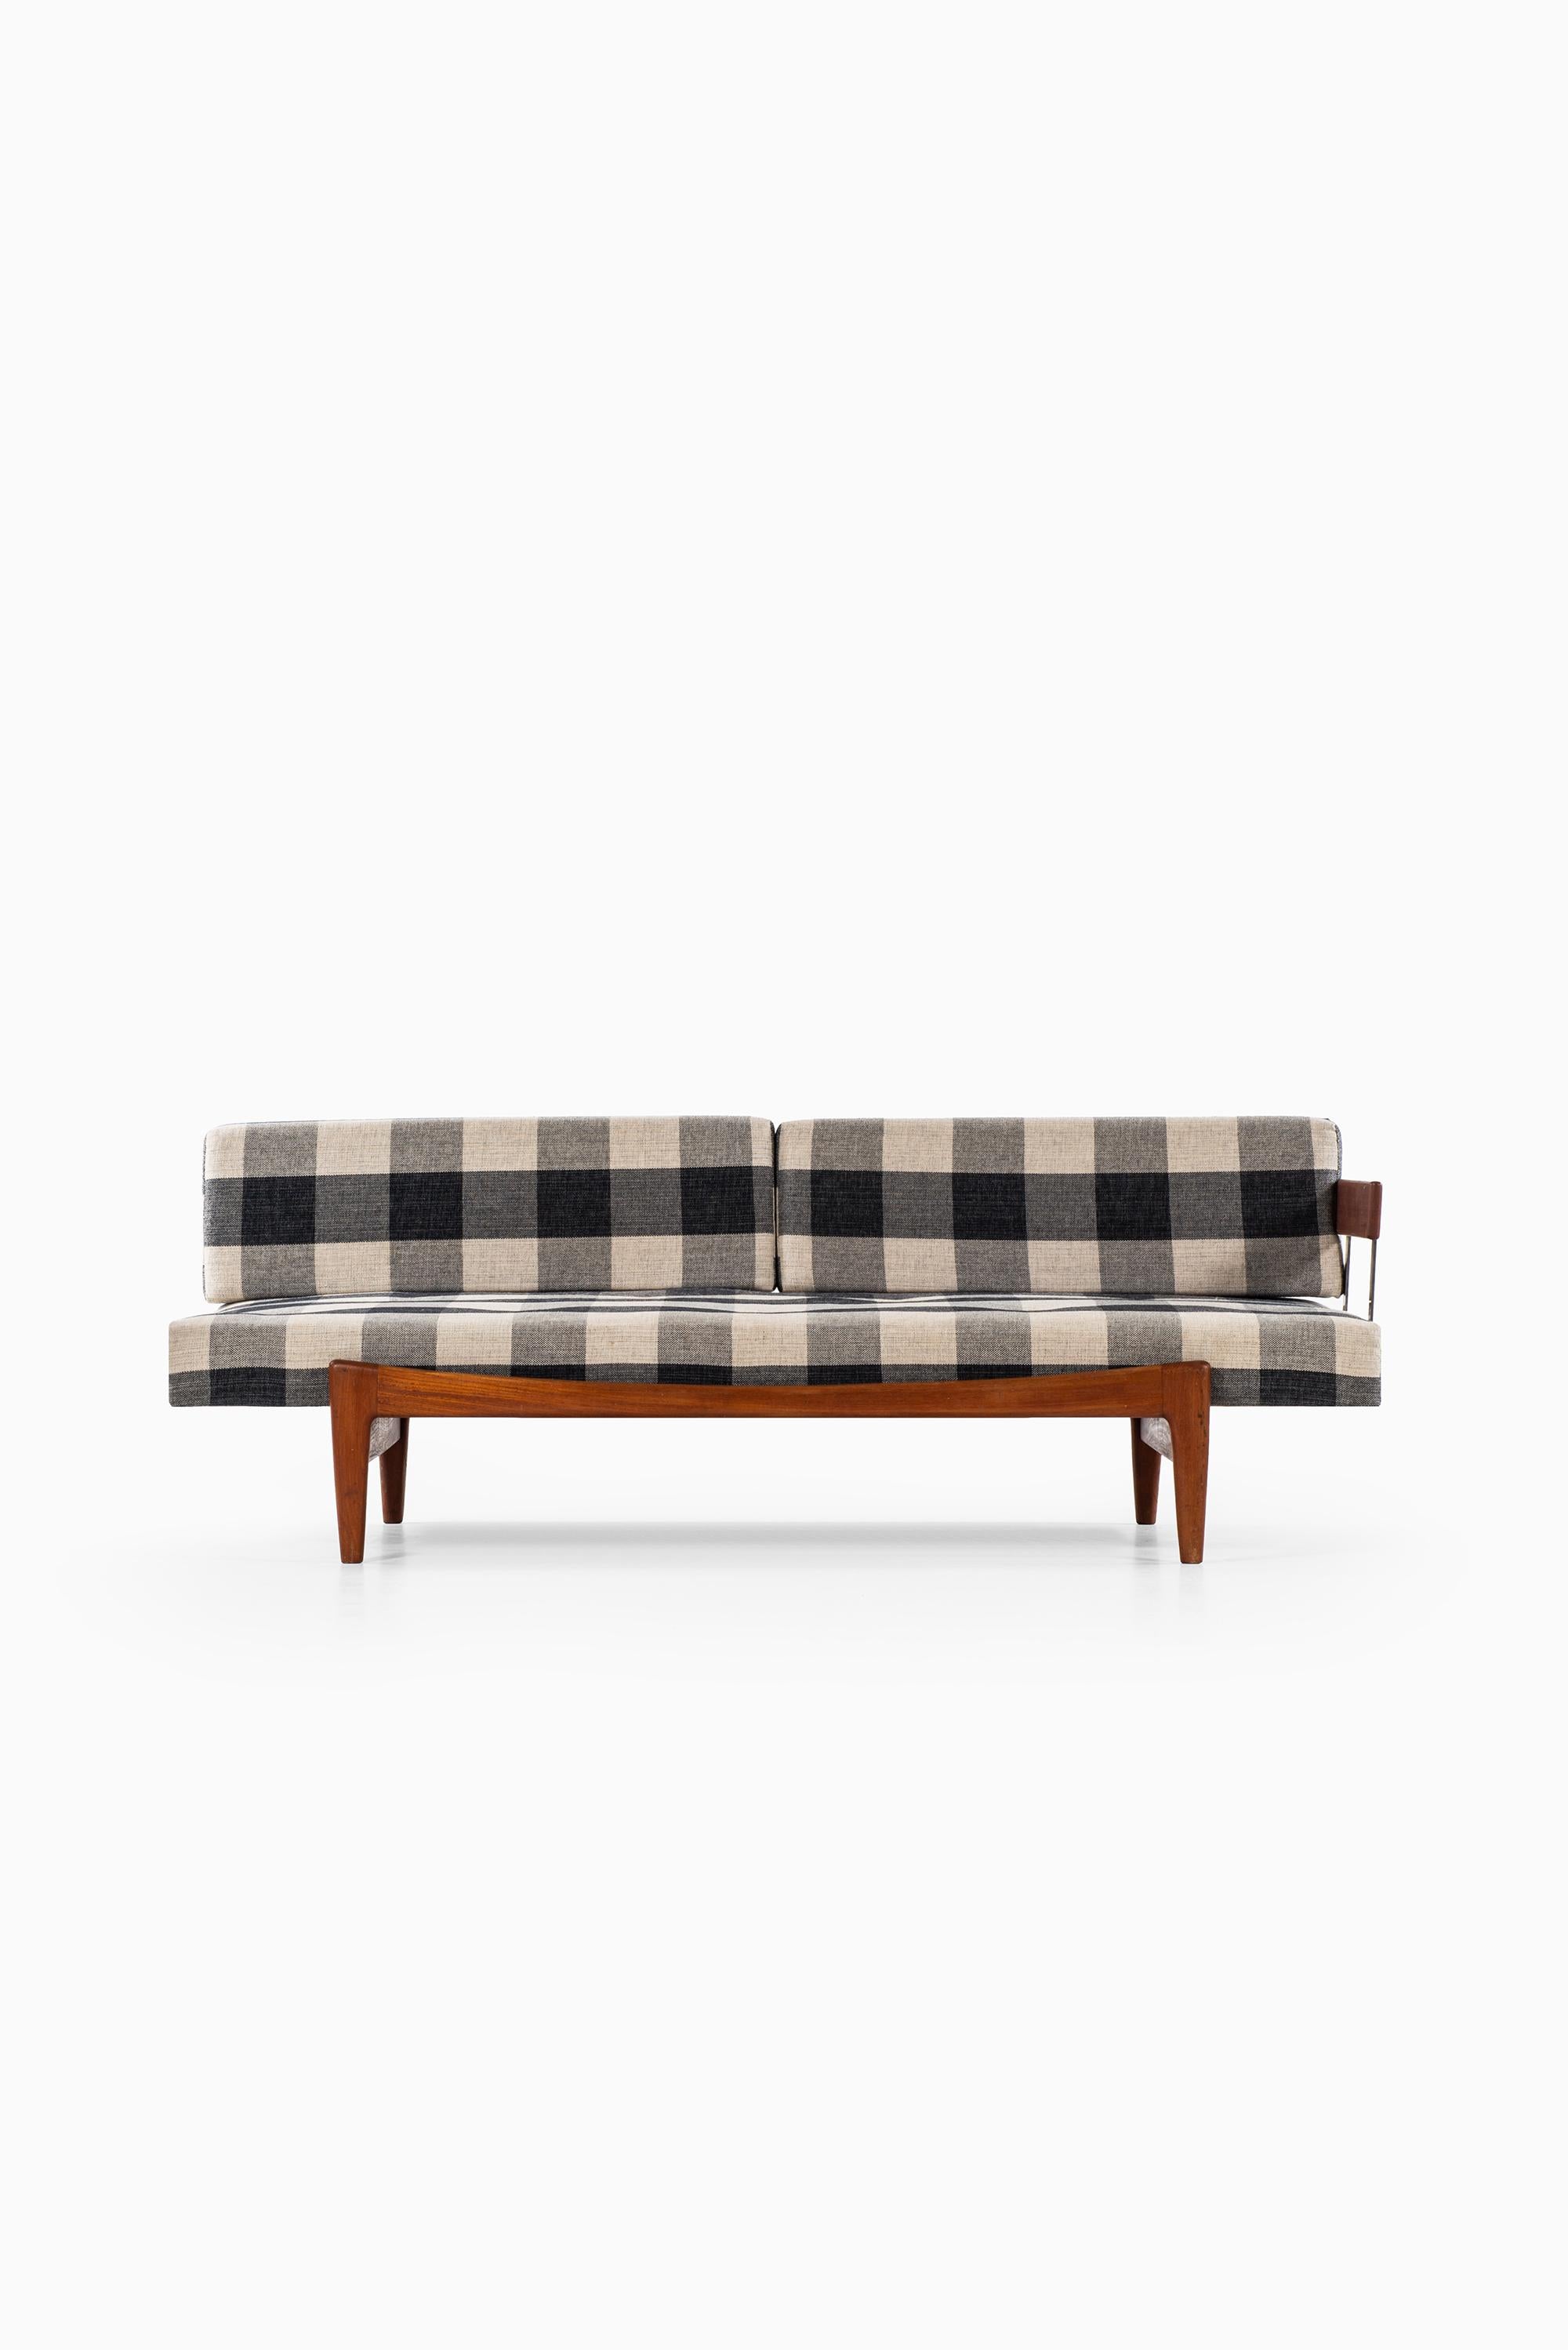 Scandinavian Modern Ib Kofod-Larsen Sofa / Daybed by Seffle Möbelfabrik in Sweden